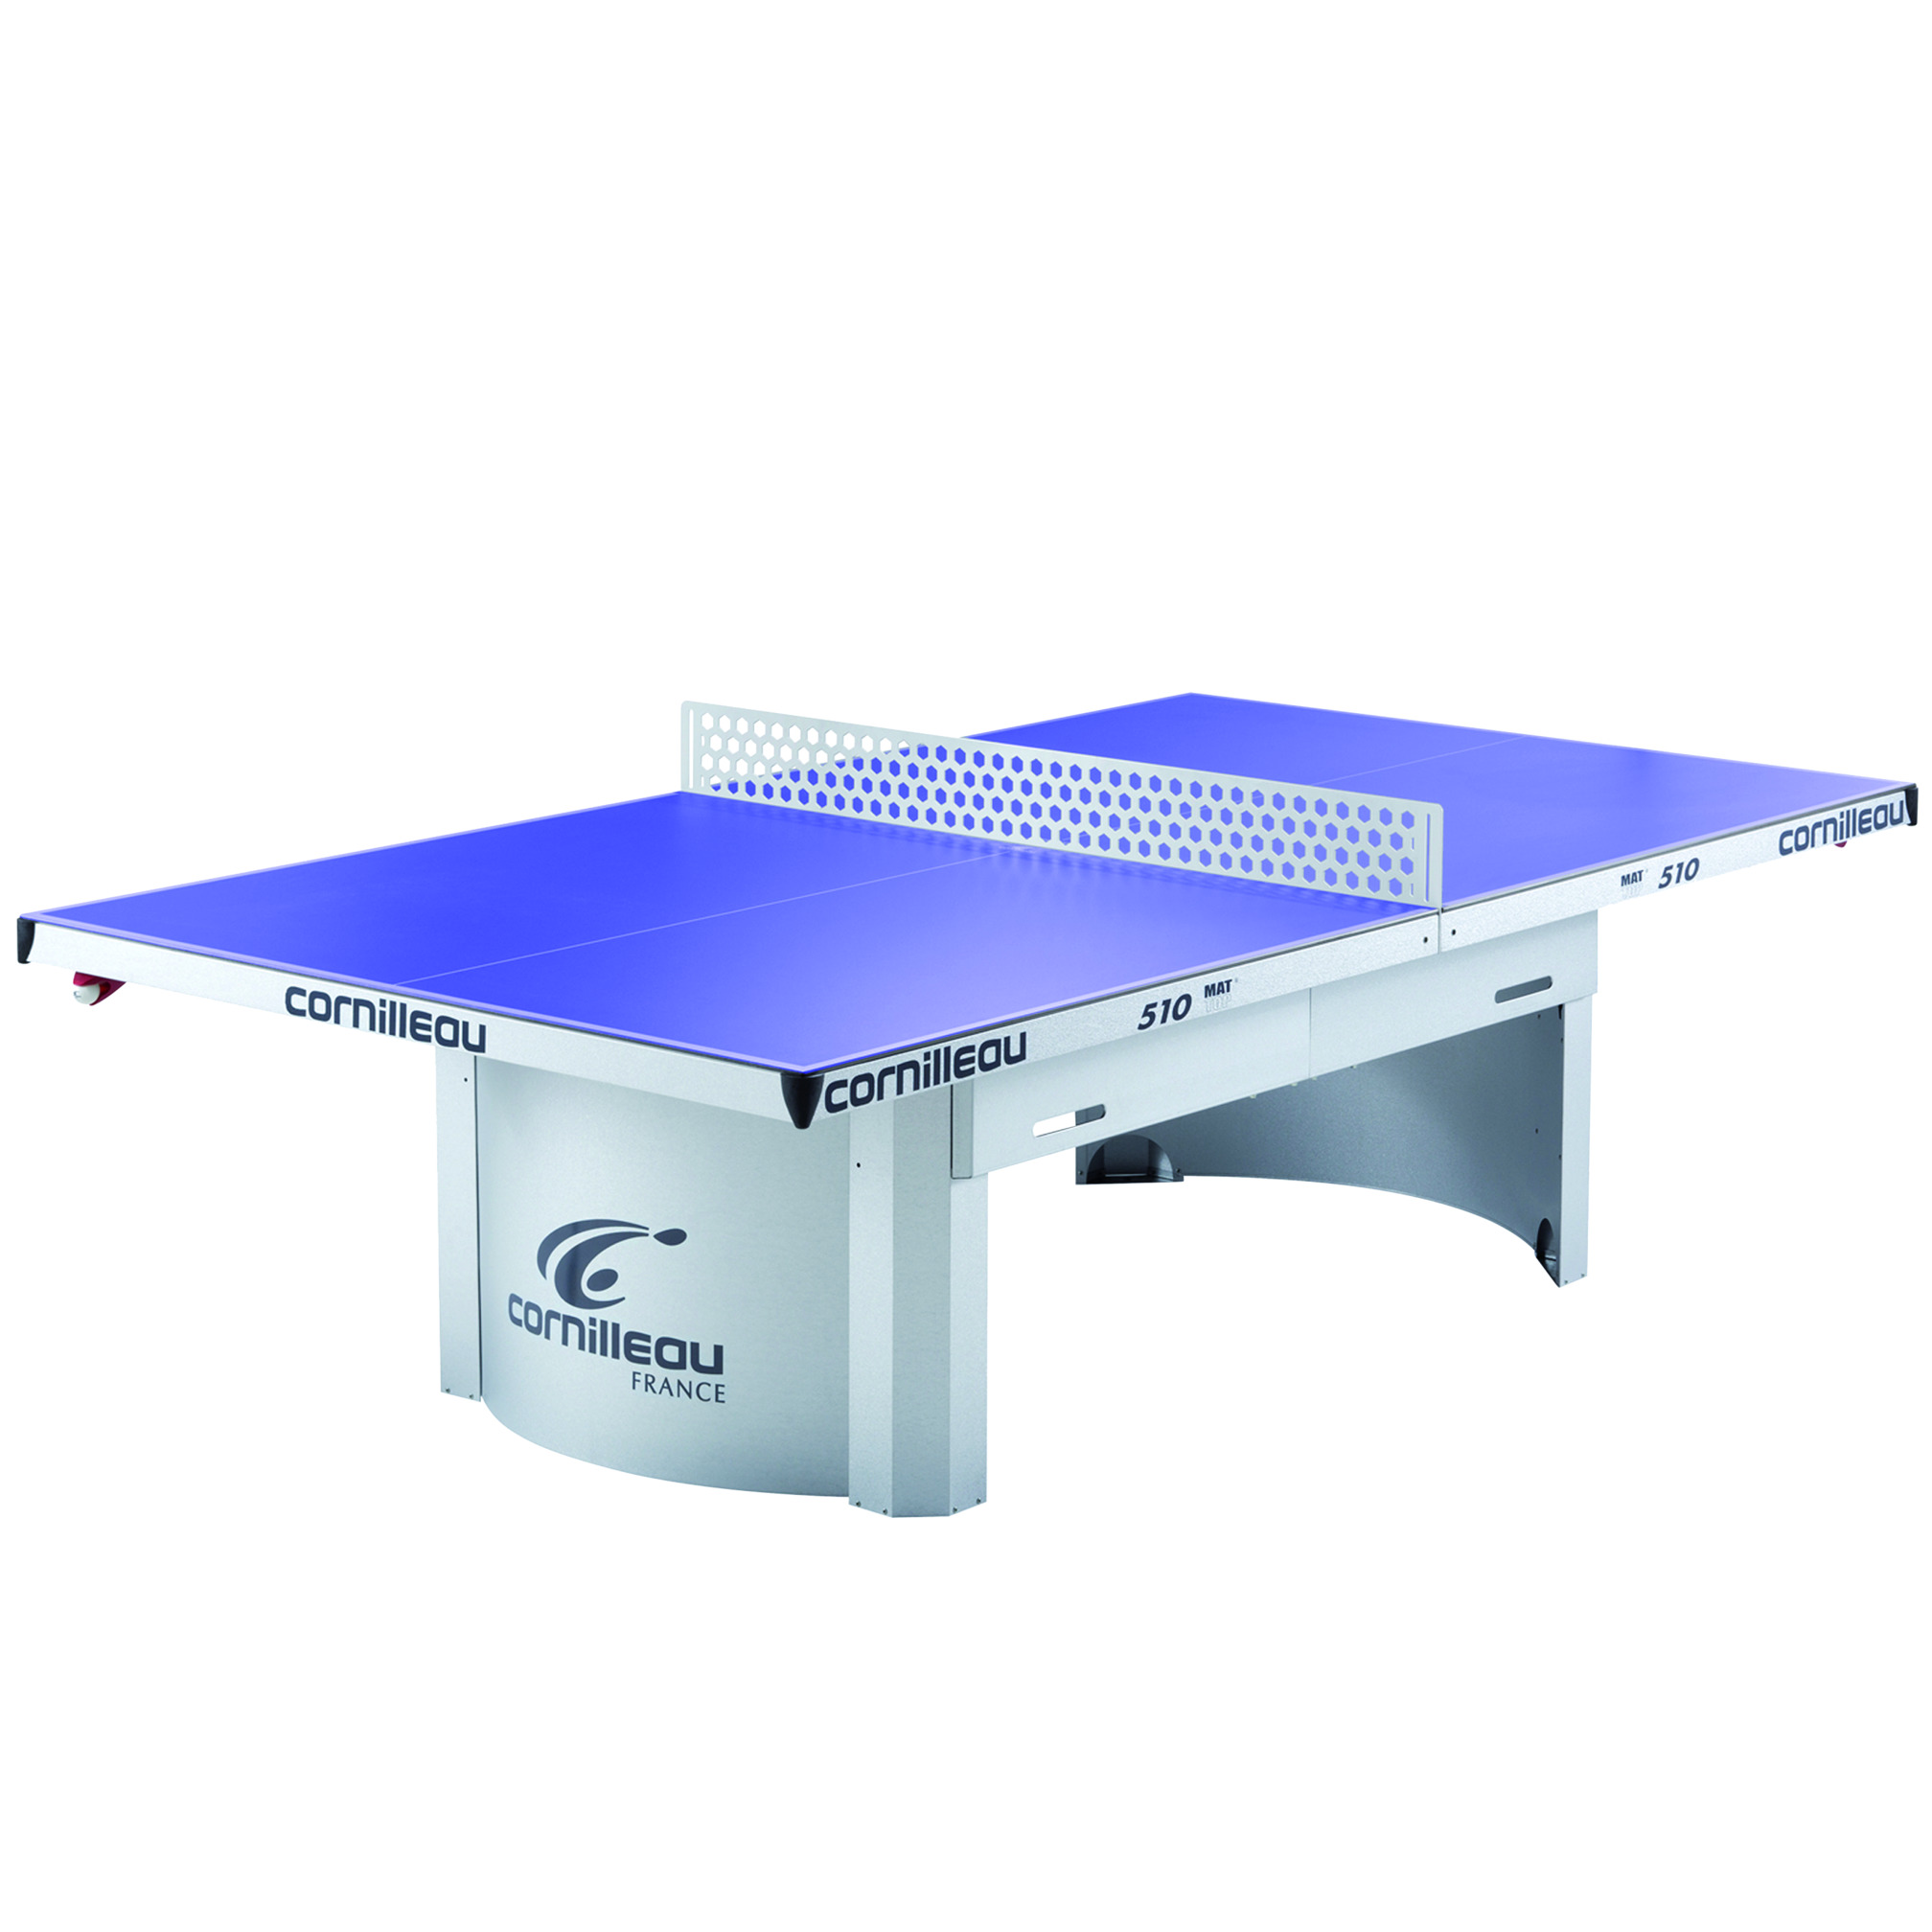 Table tennis table Cornilleau Pro 510